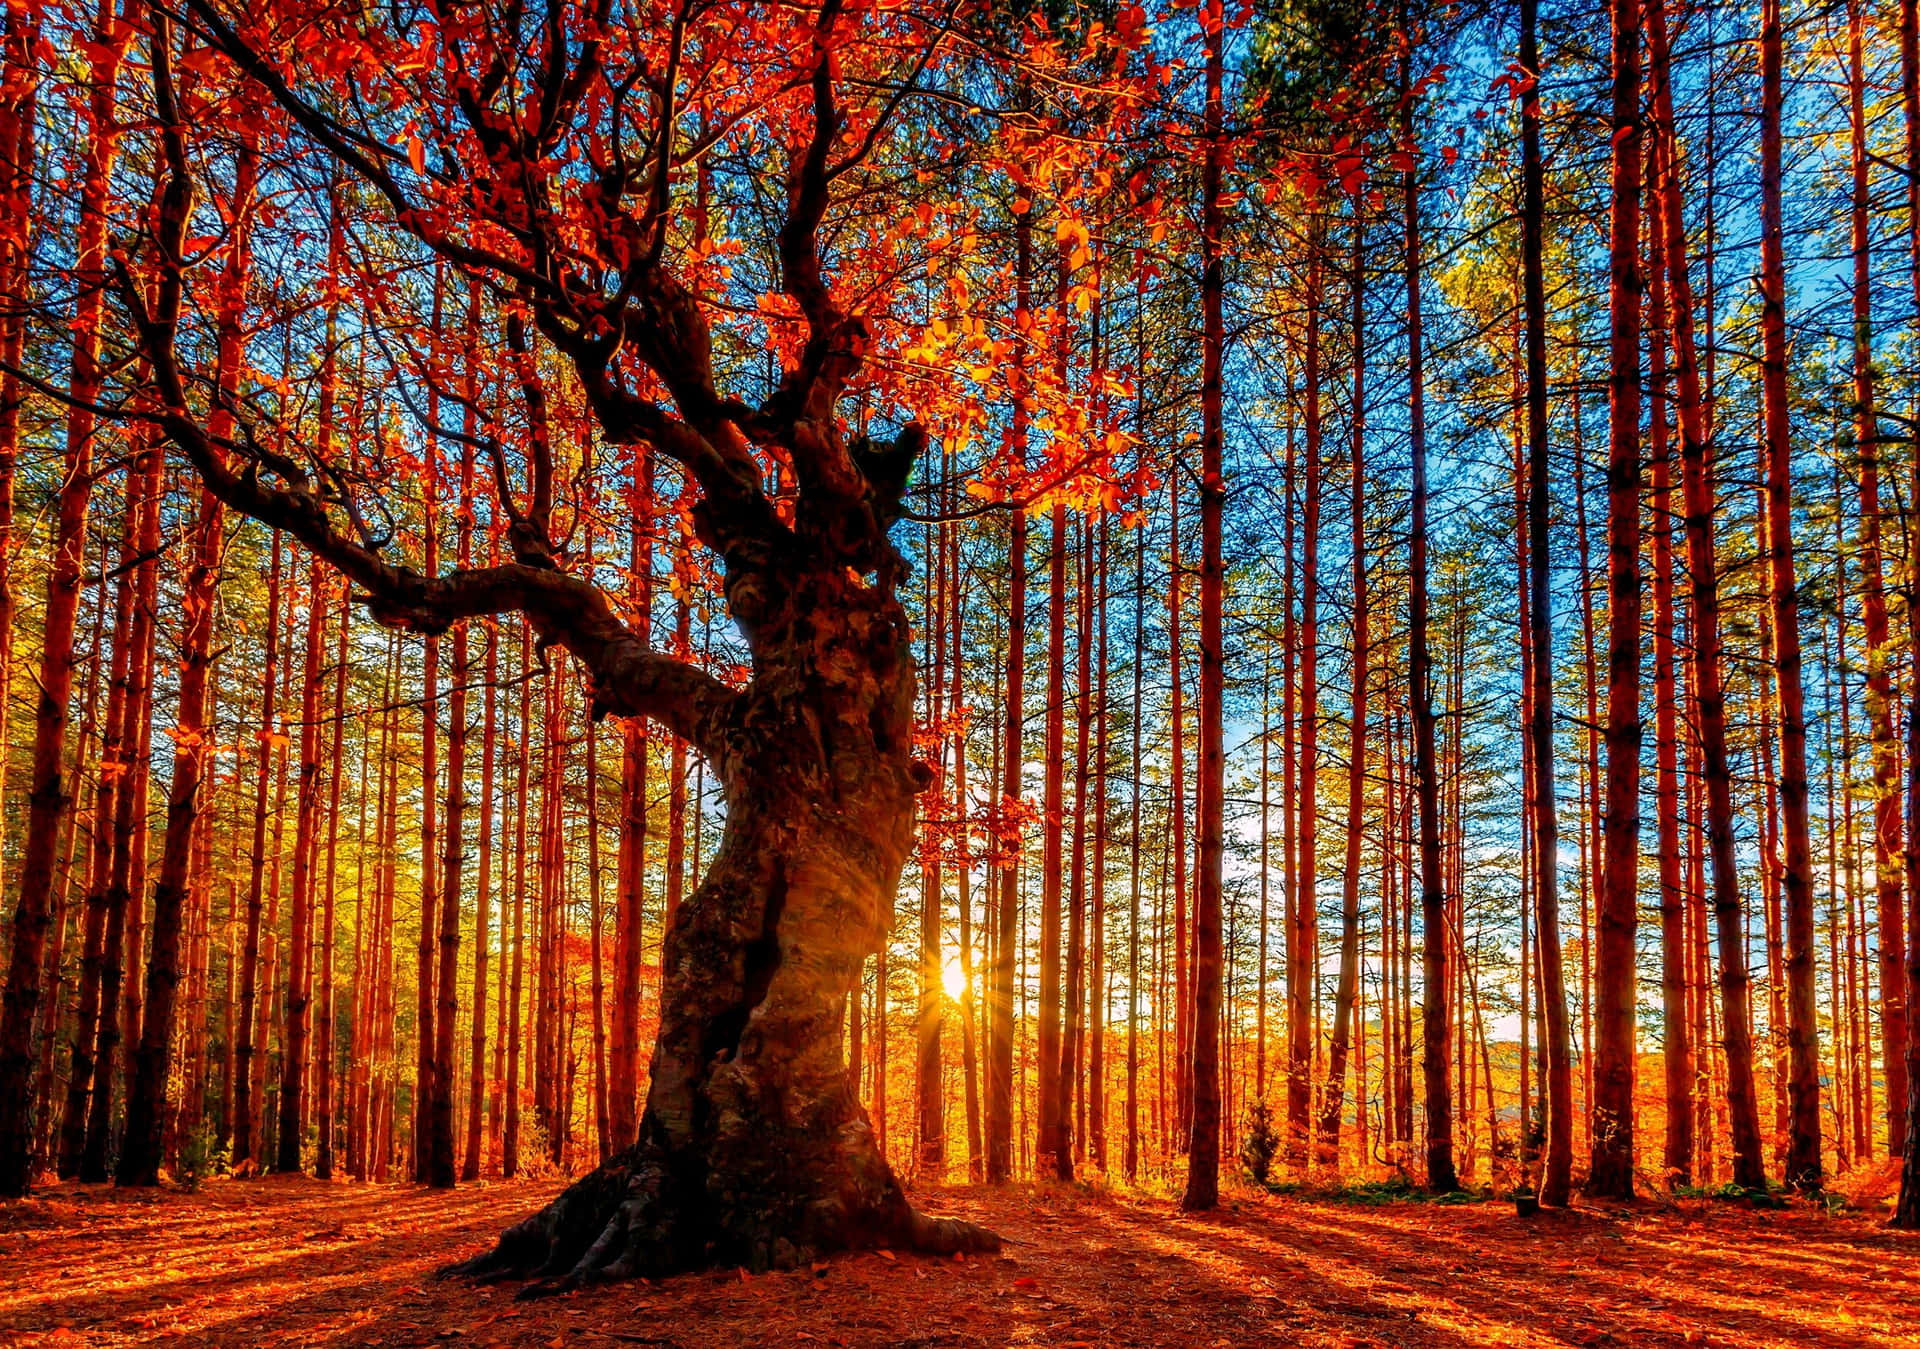 Exploring the array of vibrant autumnal hues. Wallpaper